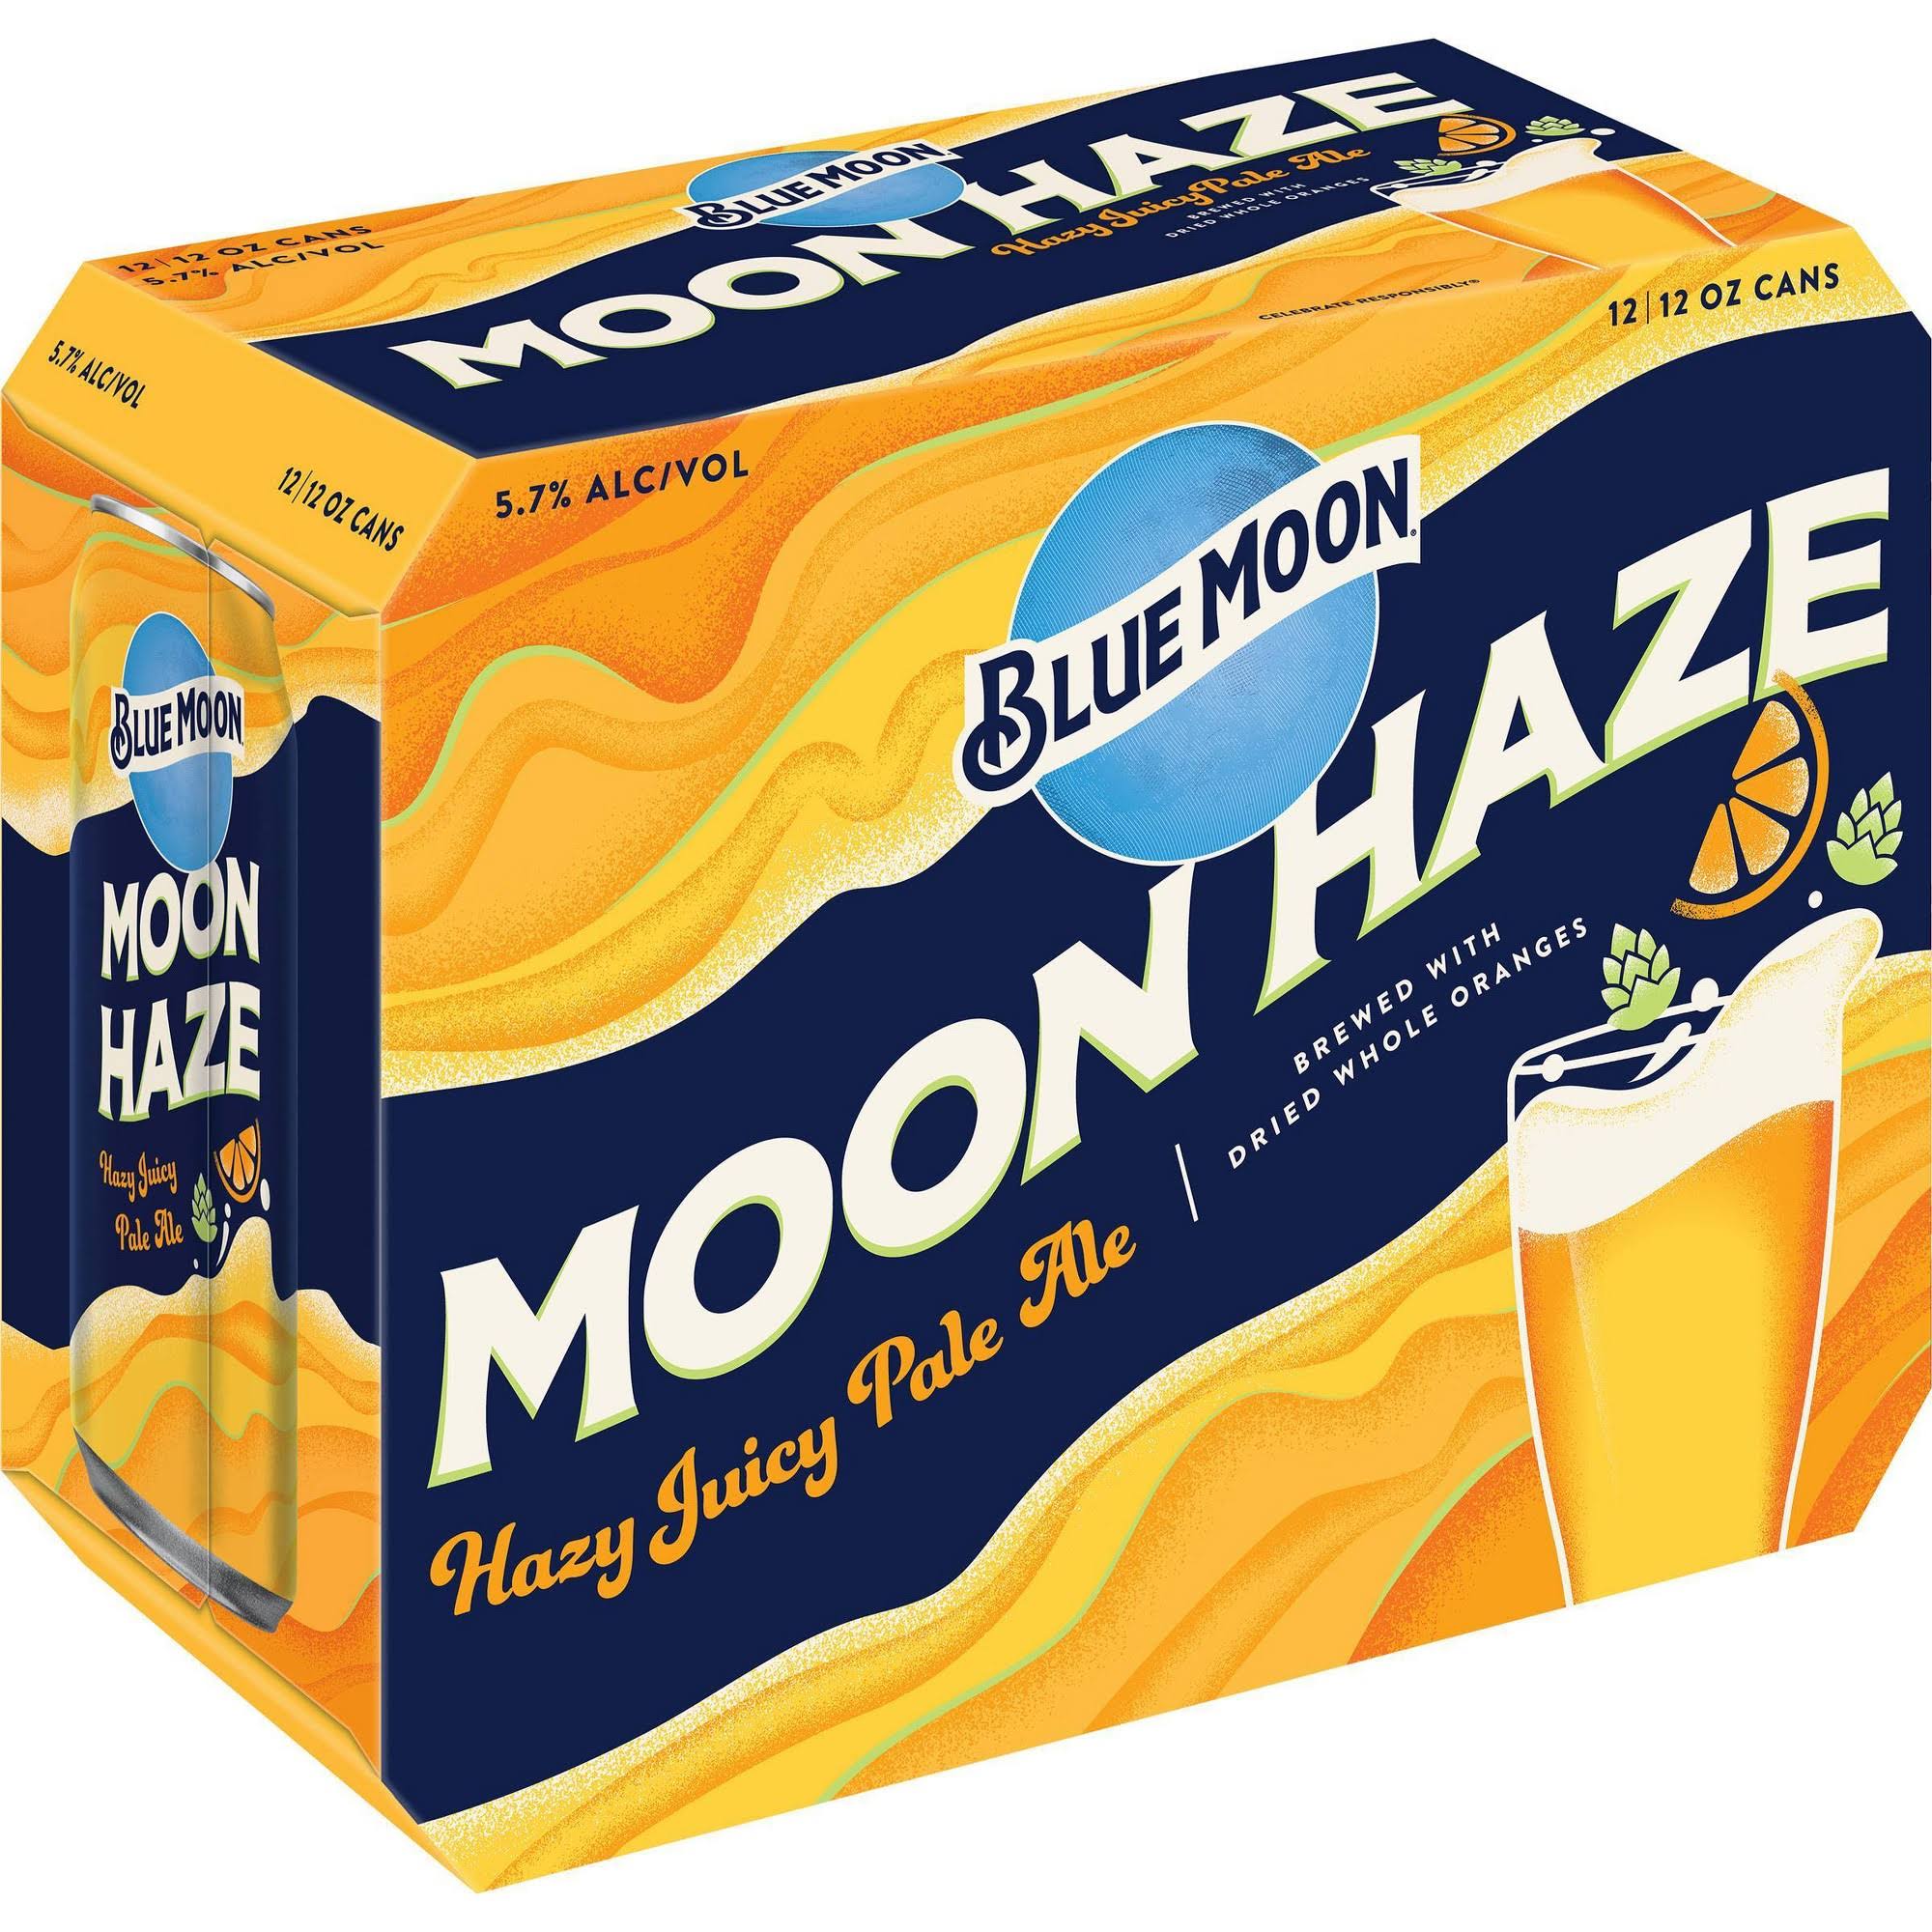 Blue Moon Beer, Hazy Juicy Pale Ale, Moon Haze - 12 pack, 12 oz cans